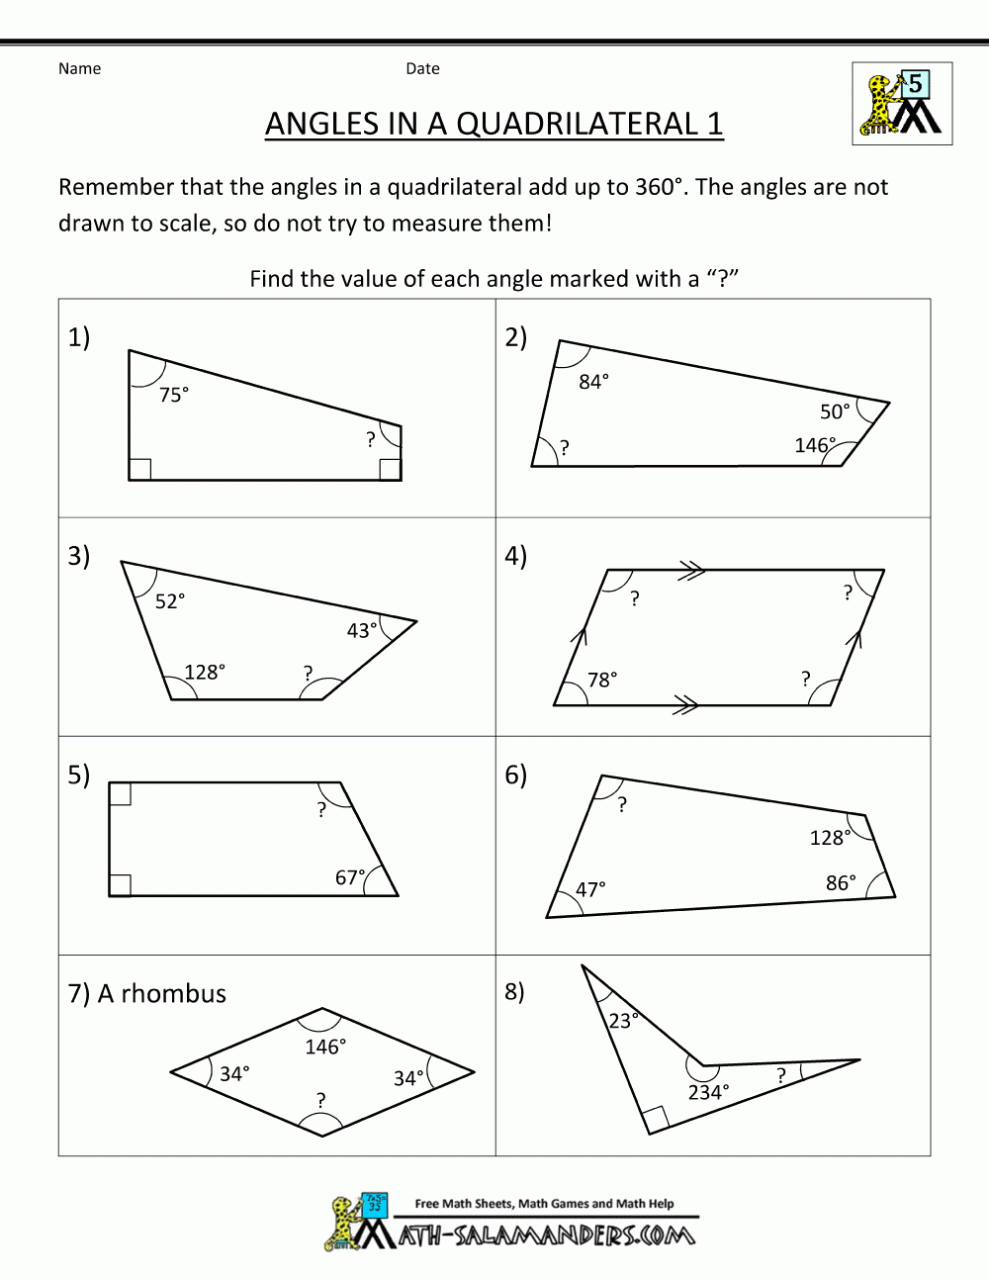 finding-missing-angles-worksheet-answer-key-geometry-thekidsworksheet